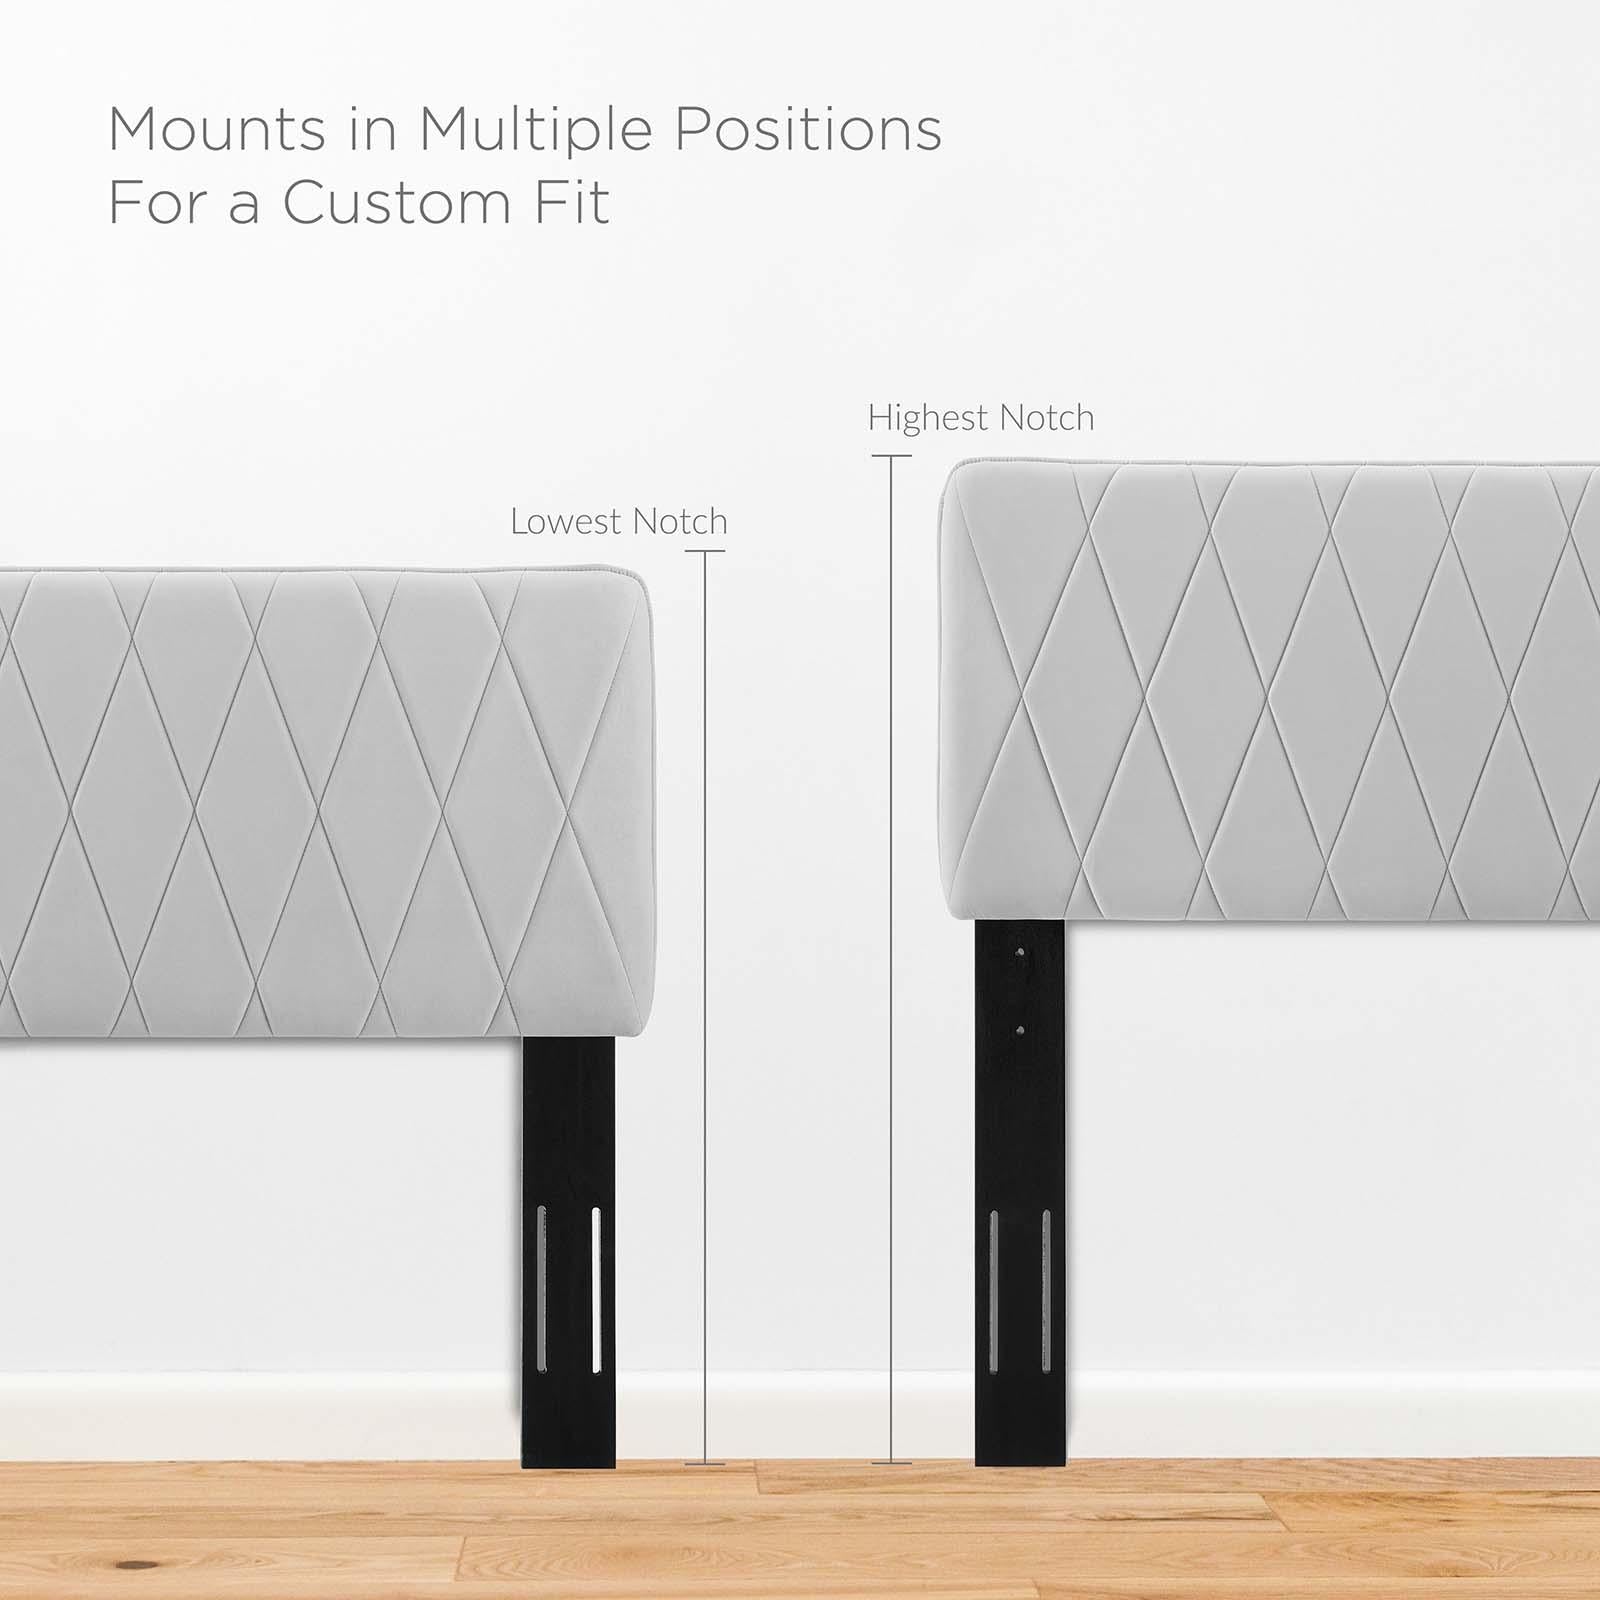 Modway Furniture Modern Phillipa Performance Velvet Twin Platform Bed - MOD-6900